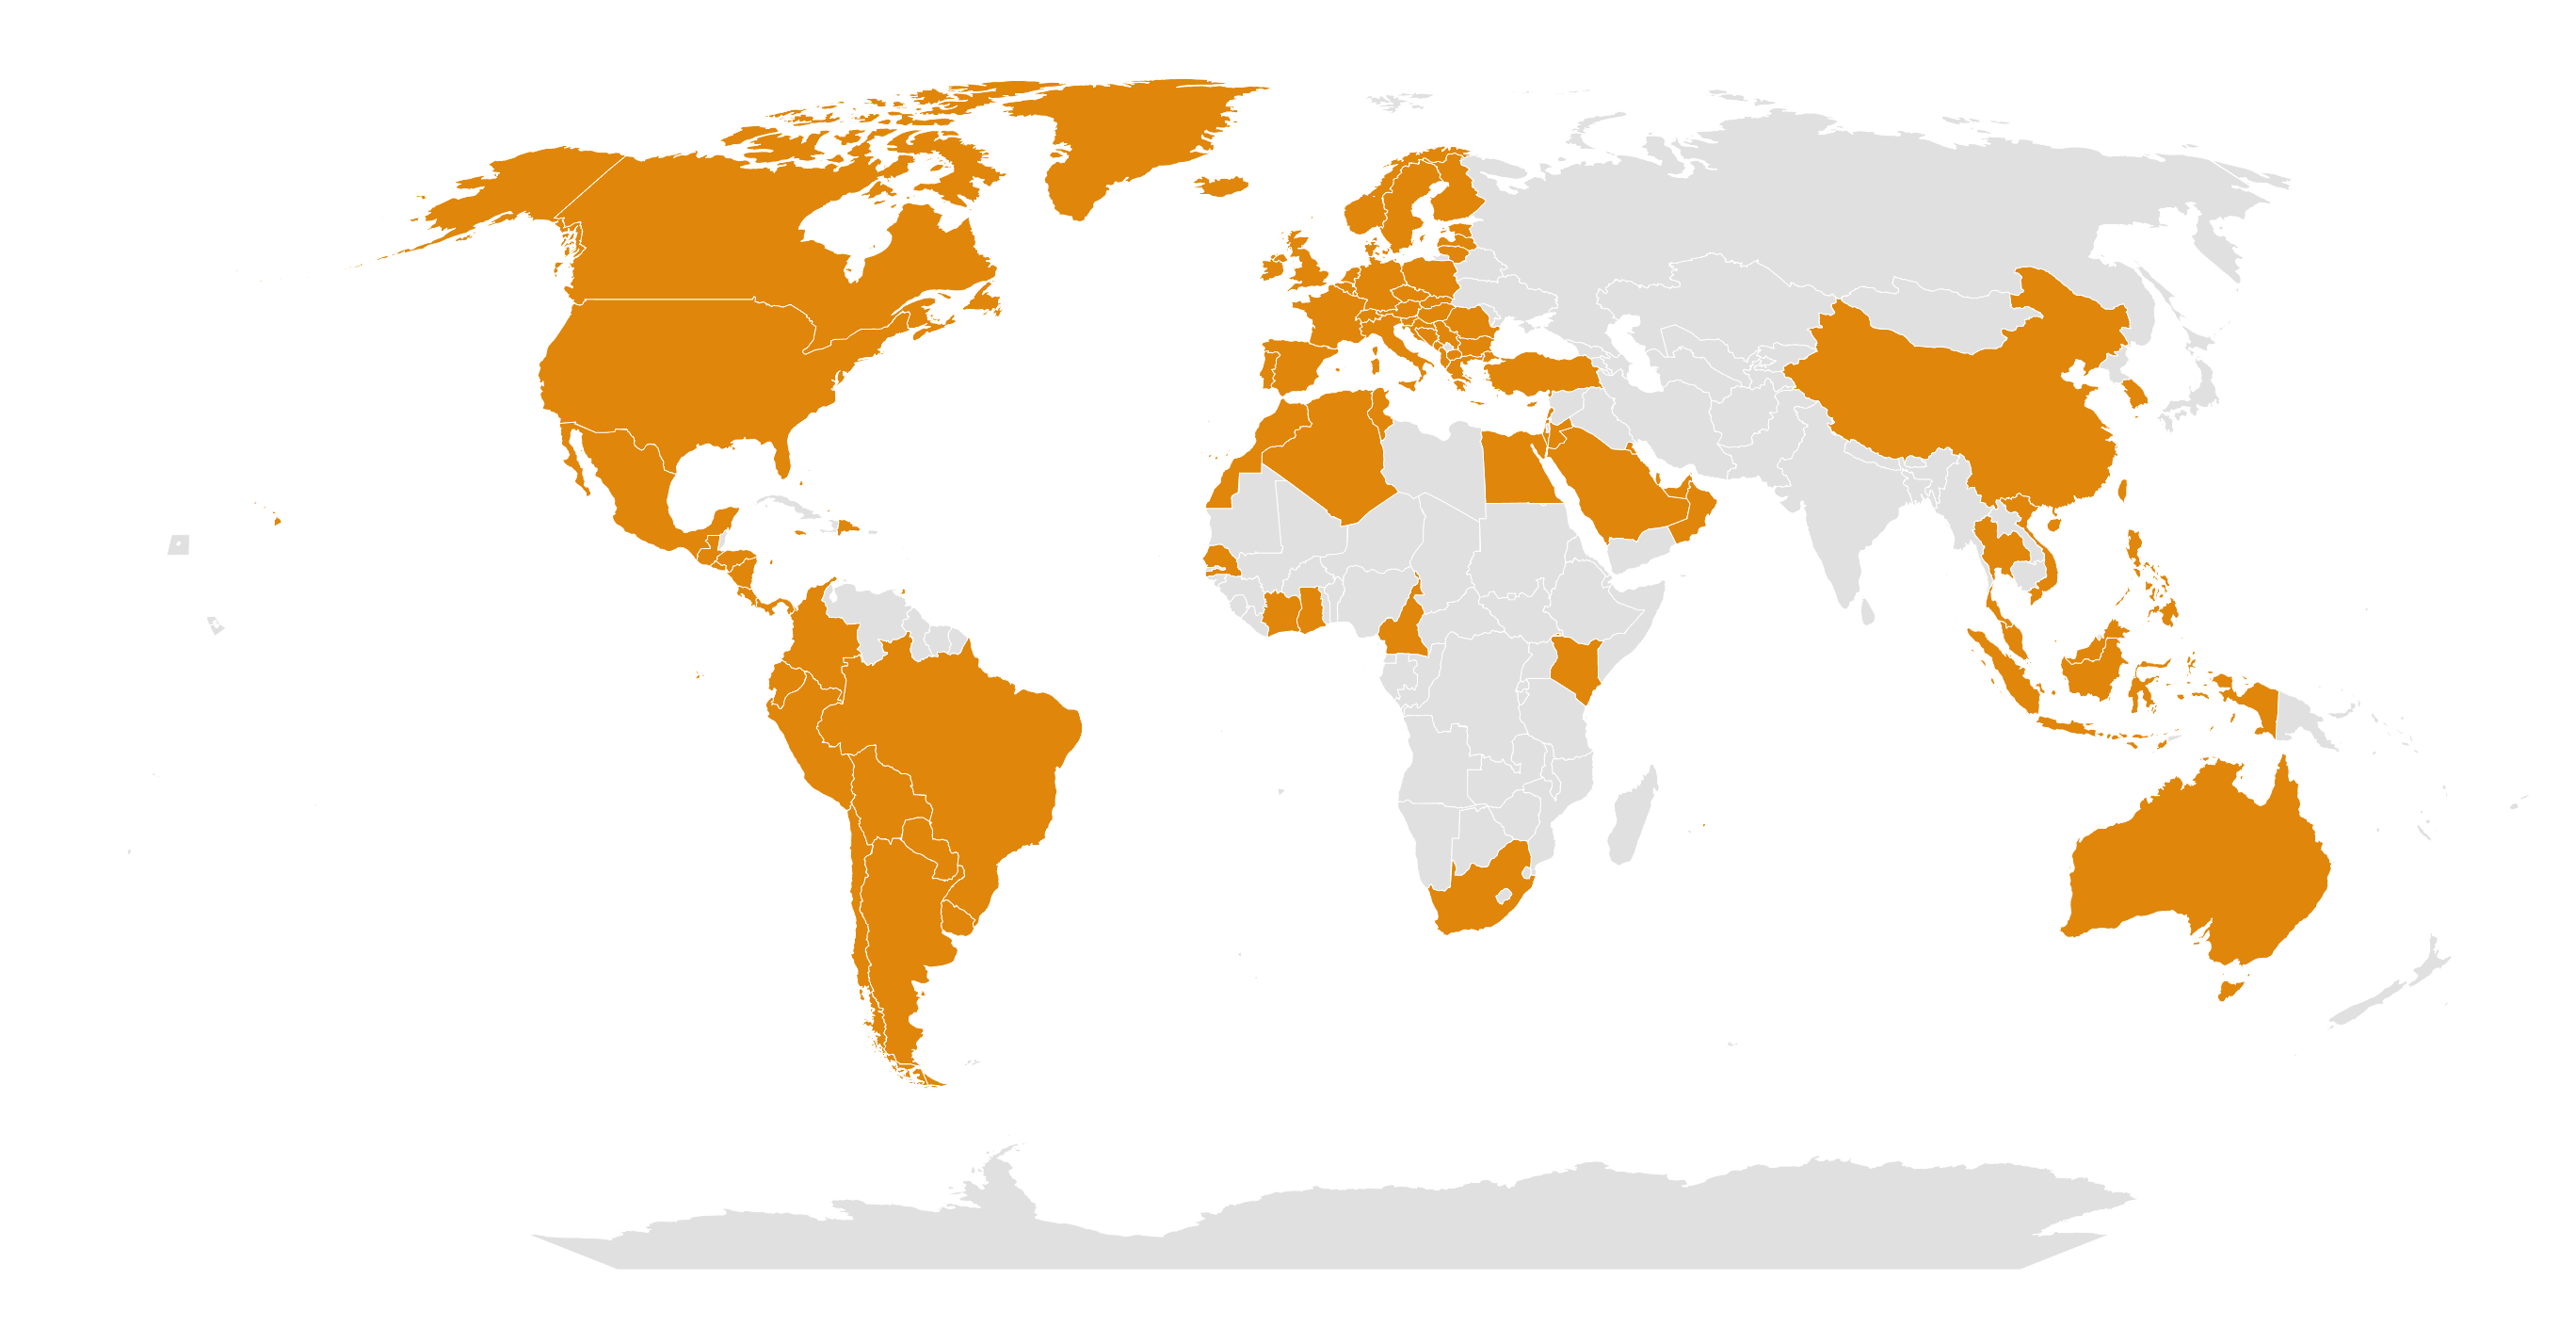 OpenData-availability-map